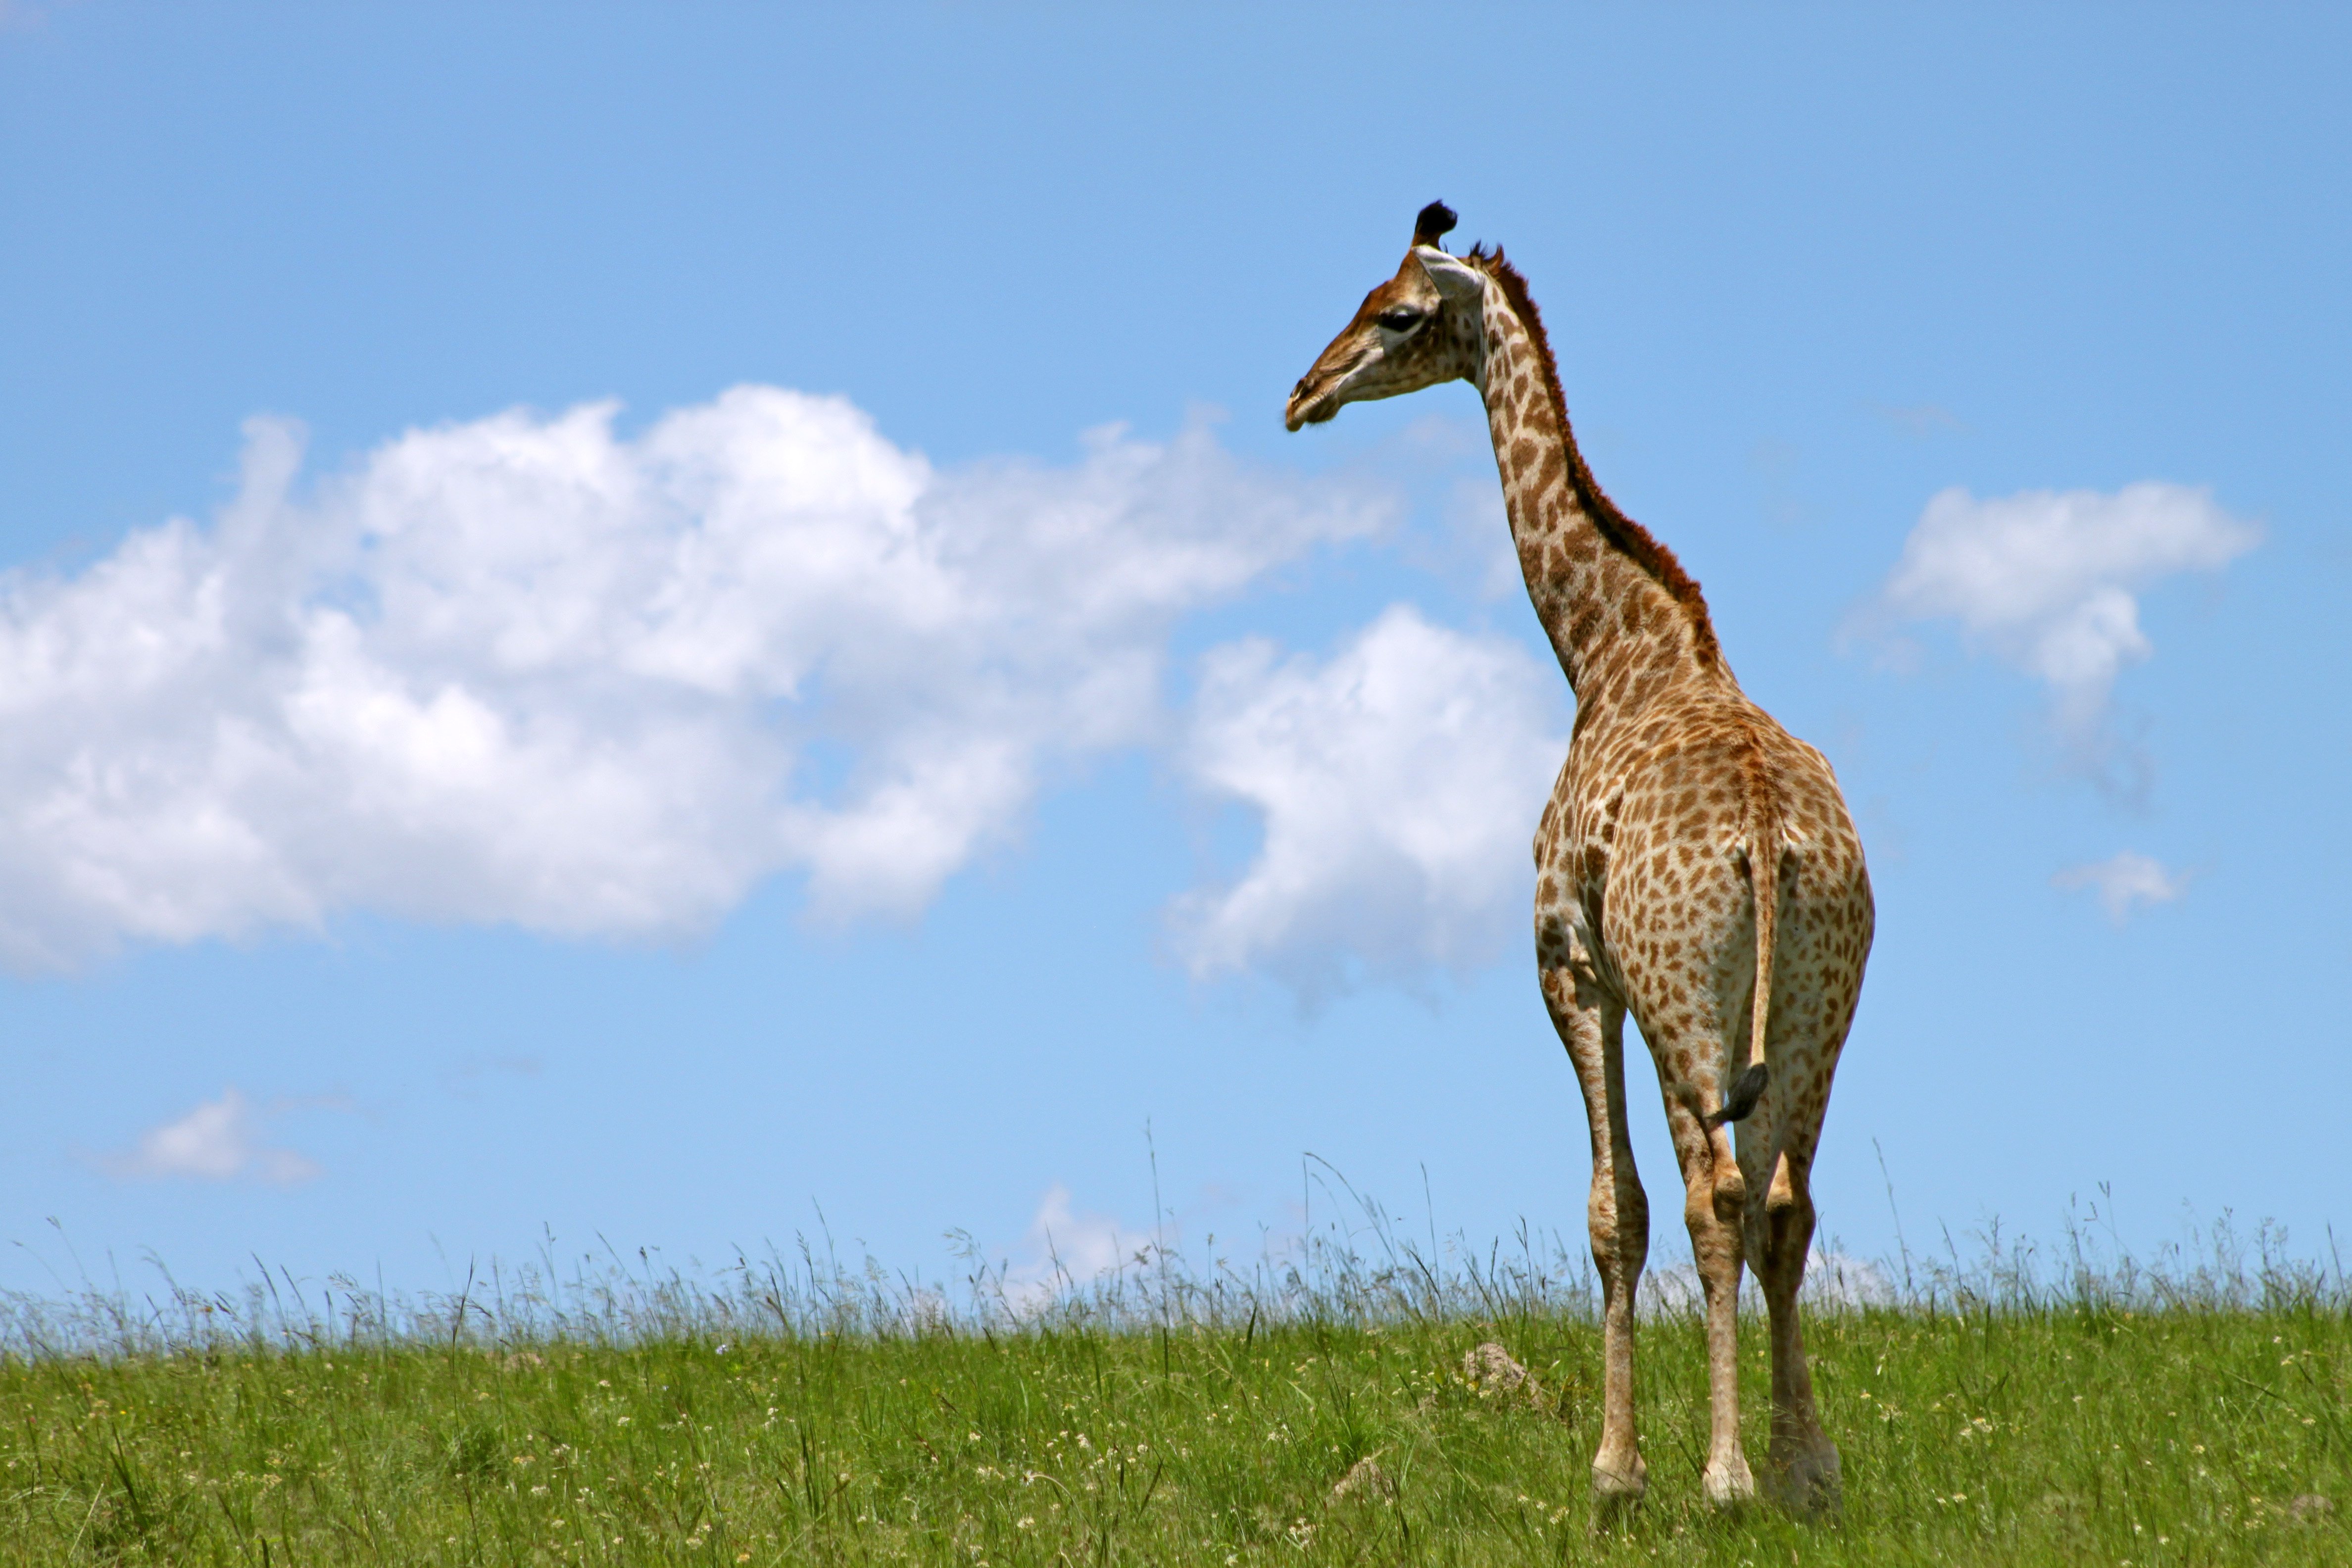 Zoo That Previously Shot Baby Giraffe Now Has a New One | Blog | PETA Latino